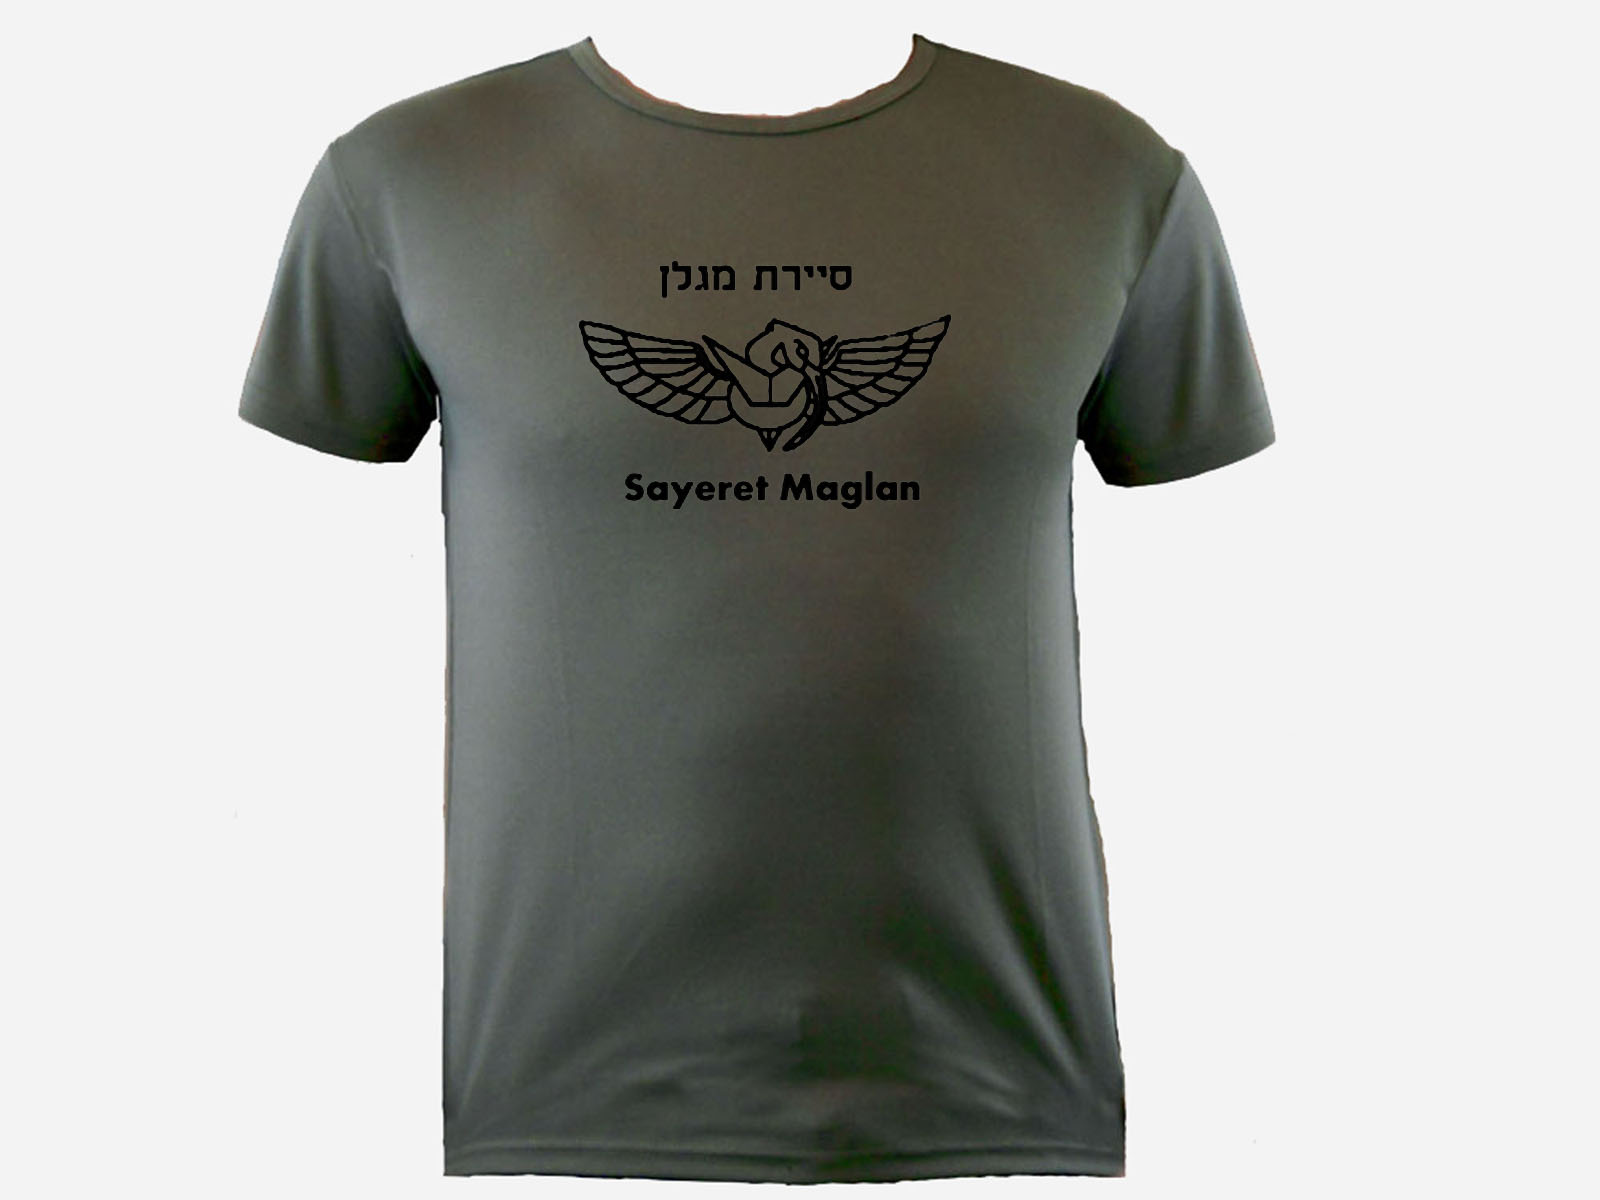 Israel Army IDF zahal Sayeret Maglan sweat proof t-shirt